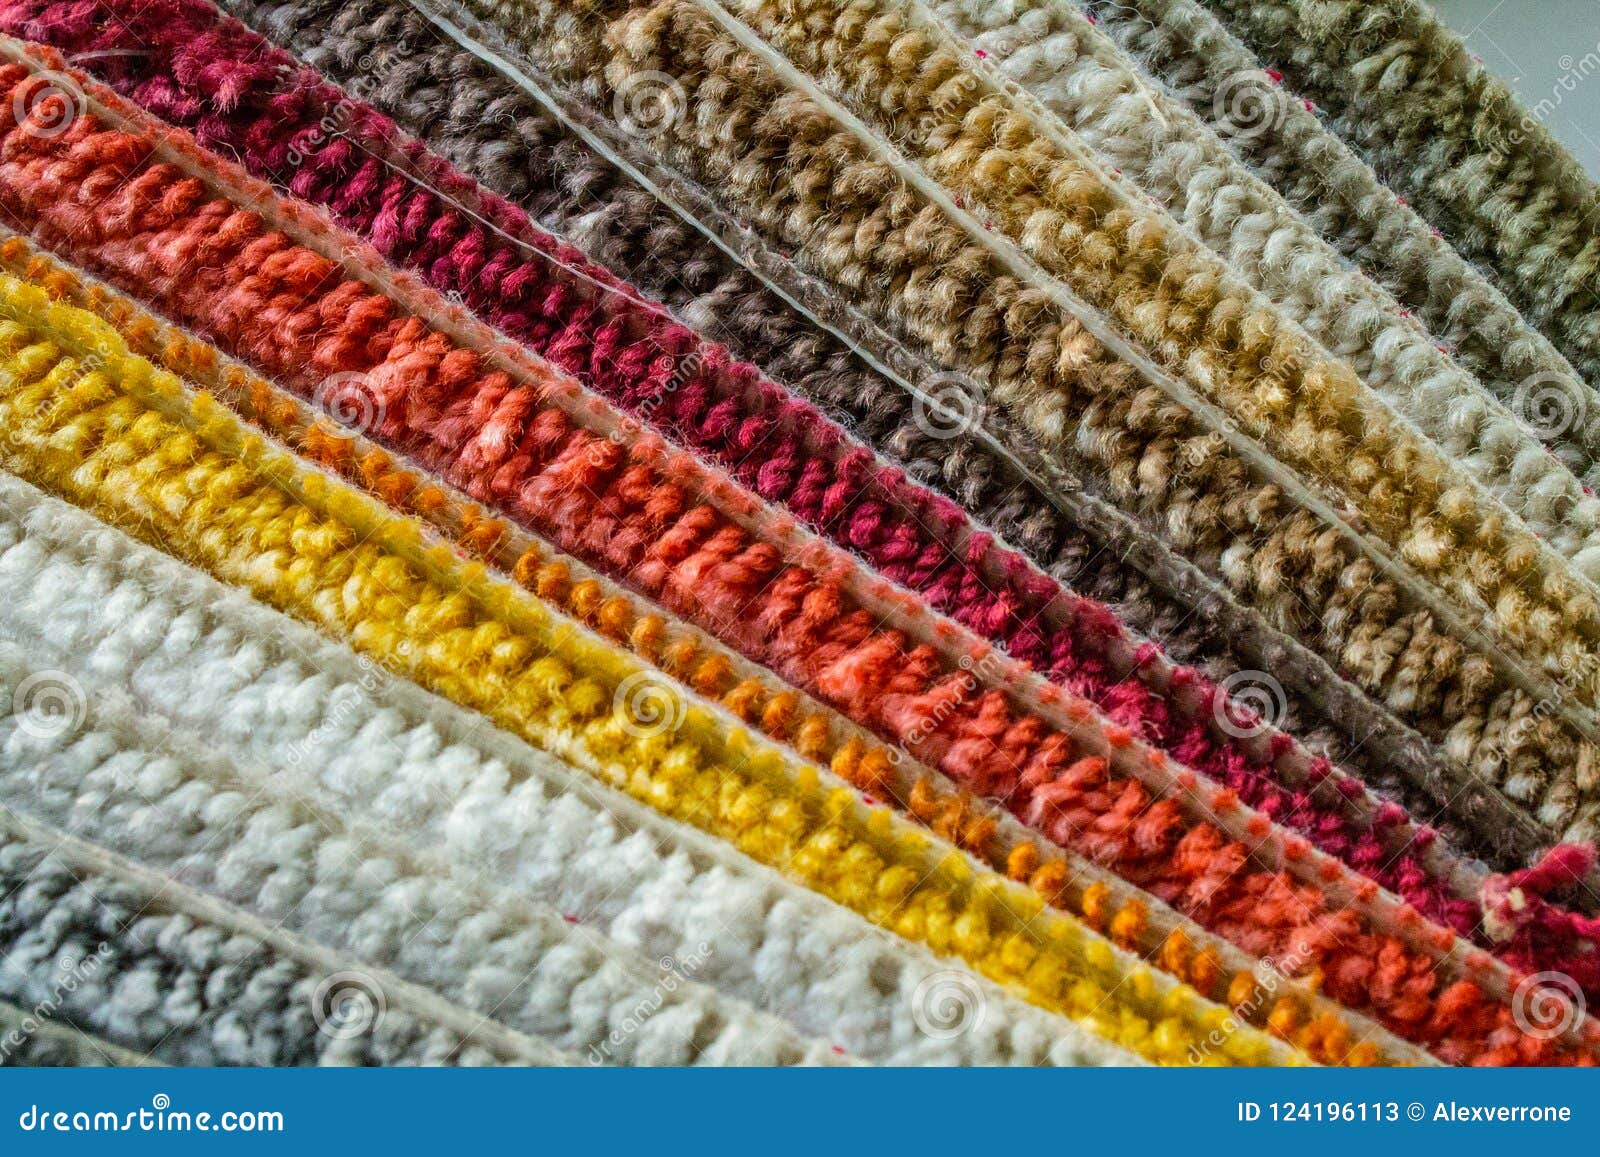 Samples Multi Colored Carpet Example Pile Carpet Color Samples Multi Colored Carpet 124196113 